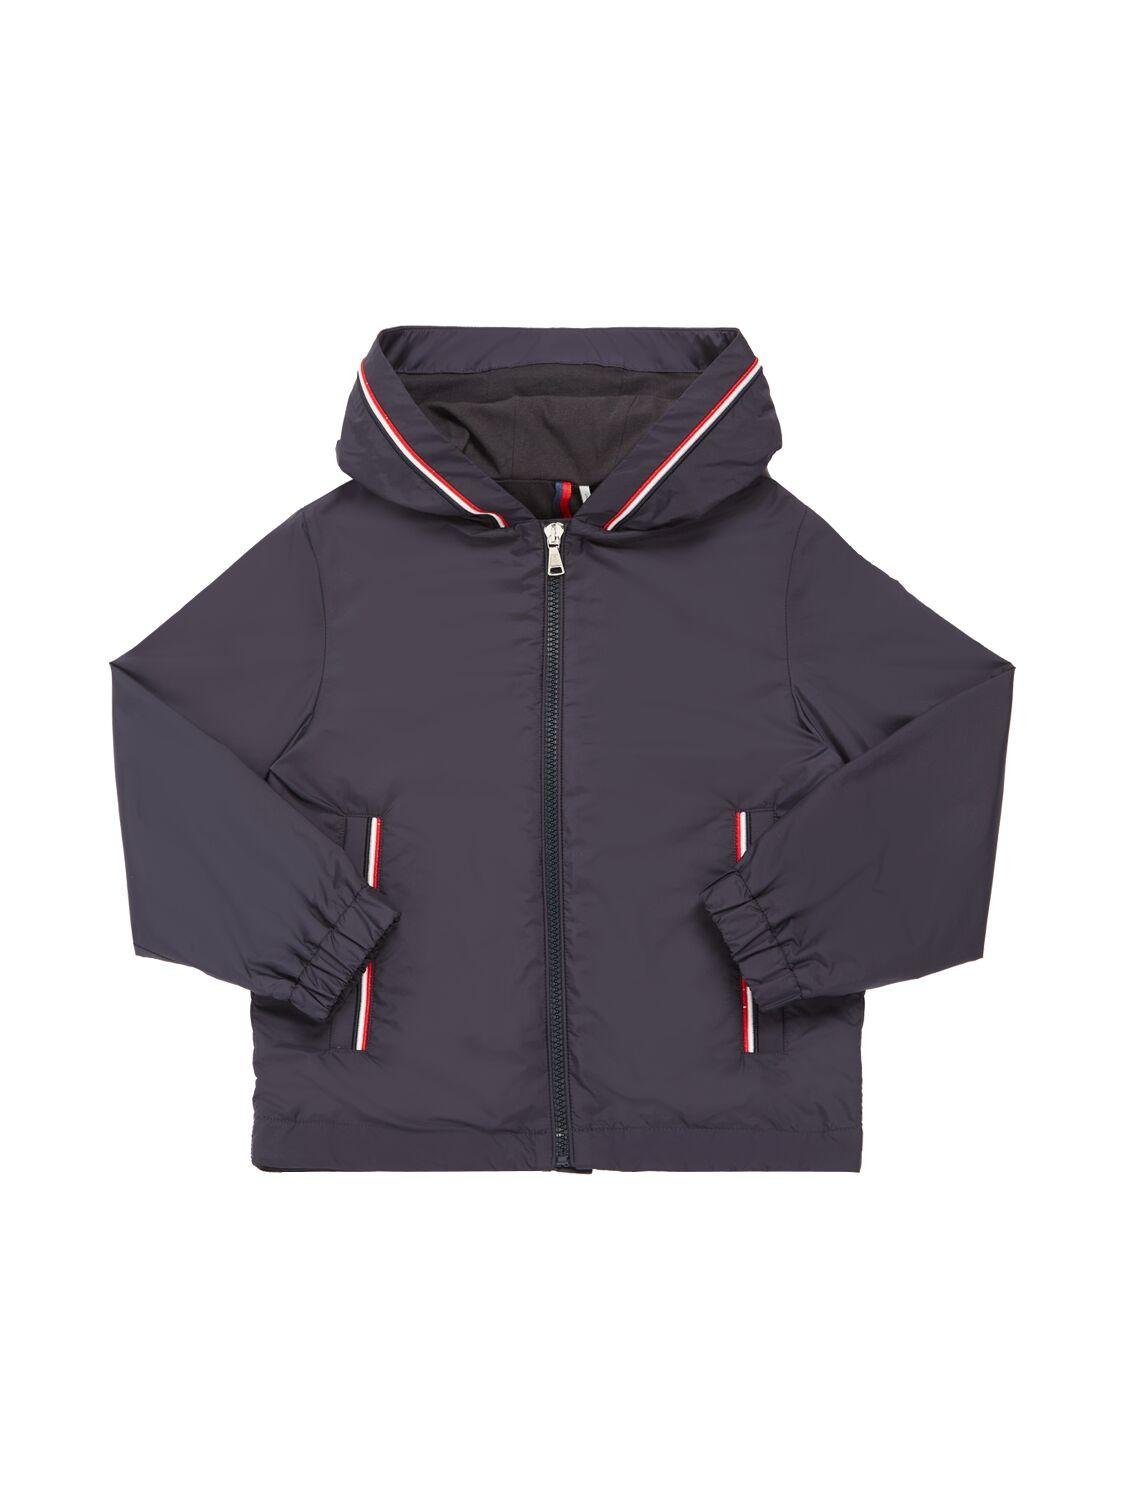 New Urville Nylon Rainwear Jacket by MONCLER